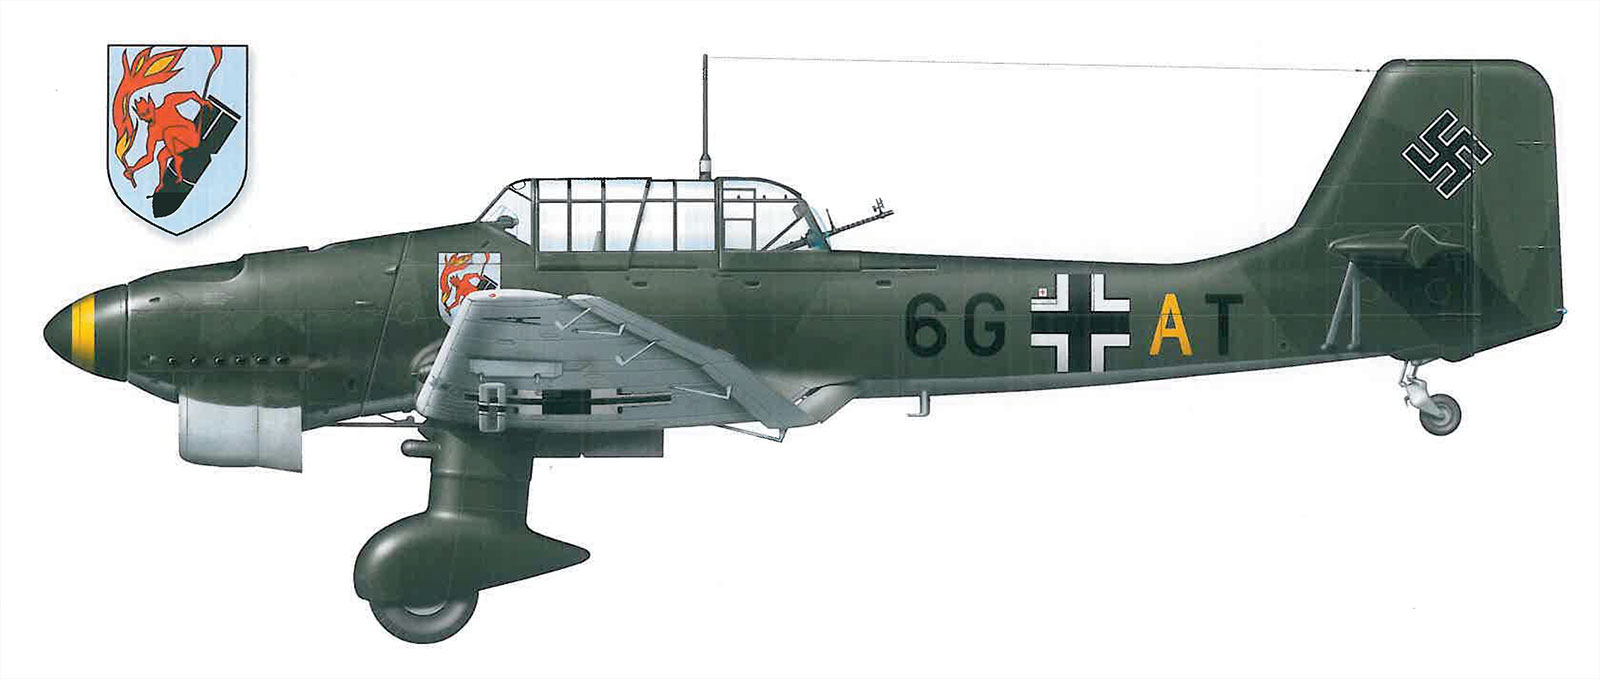 Junkers Ju 87B1 Stuka 9.StG51 (6G+AT) France May 1940 0D